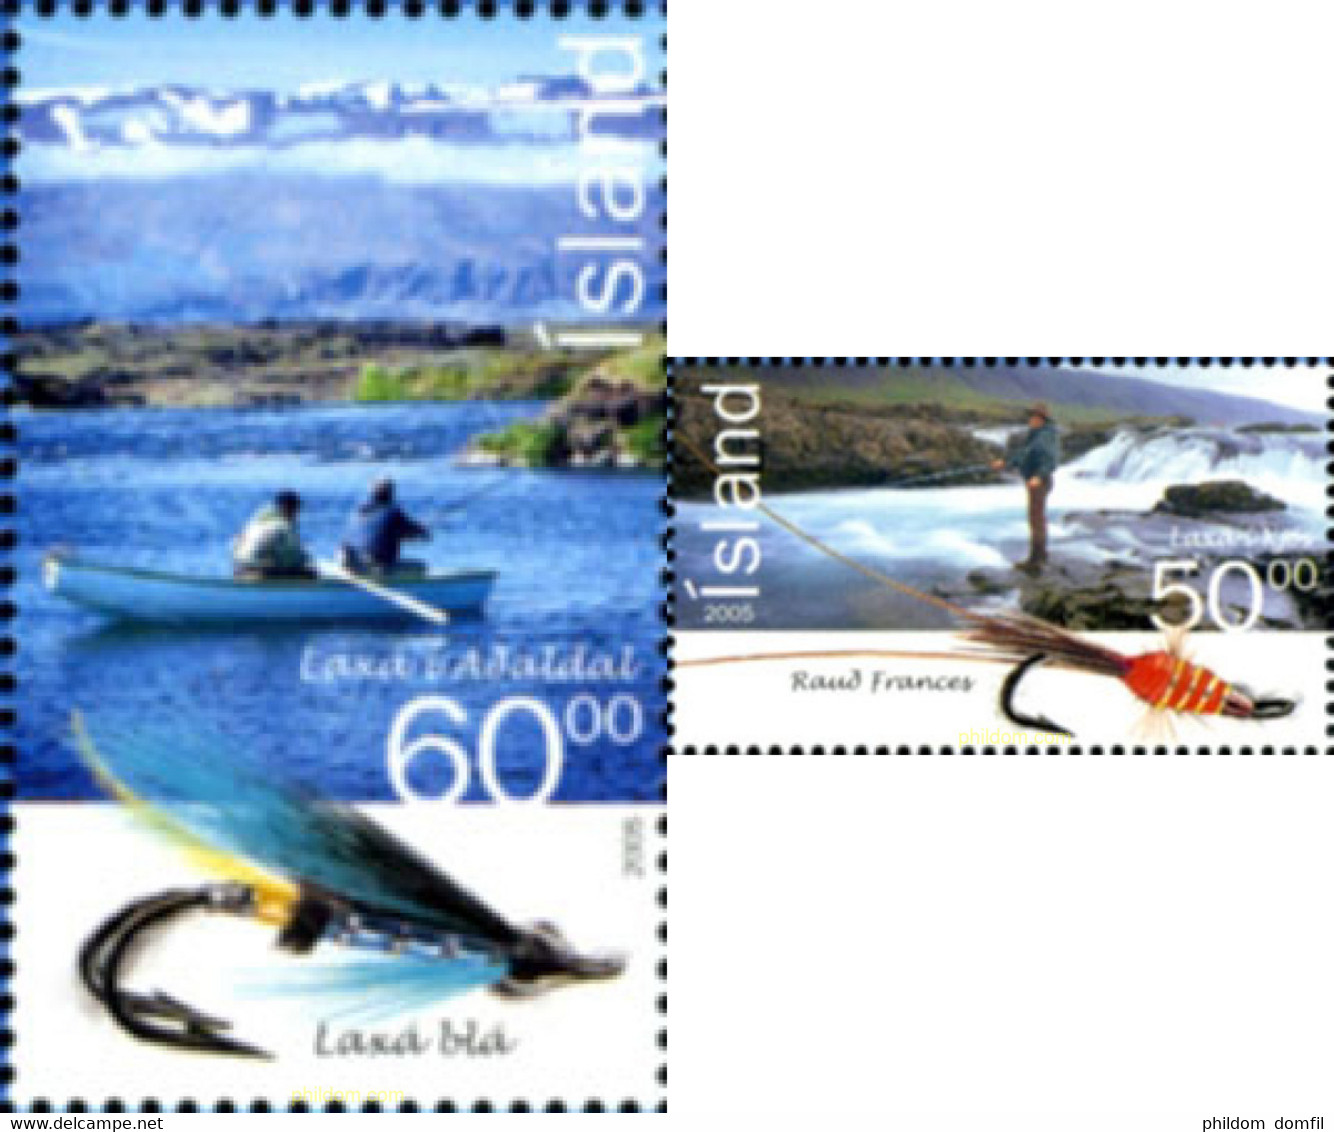 185005 MNH ISLANDIA 2005 PESCA DEL SALMON - Collections, Lots & Séries